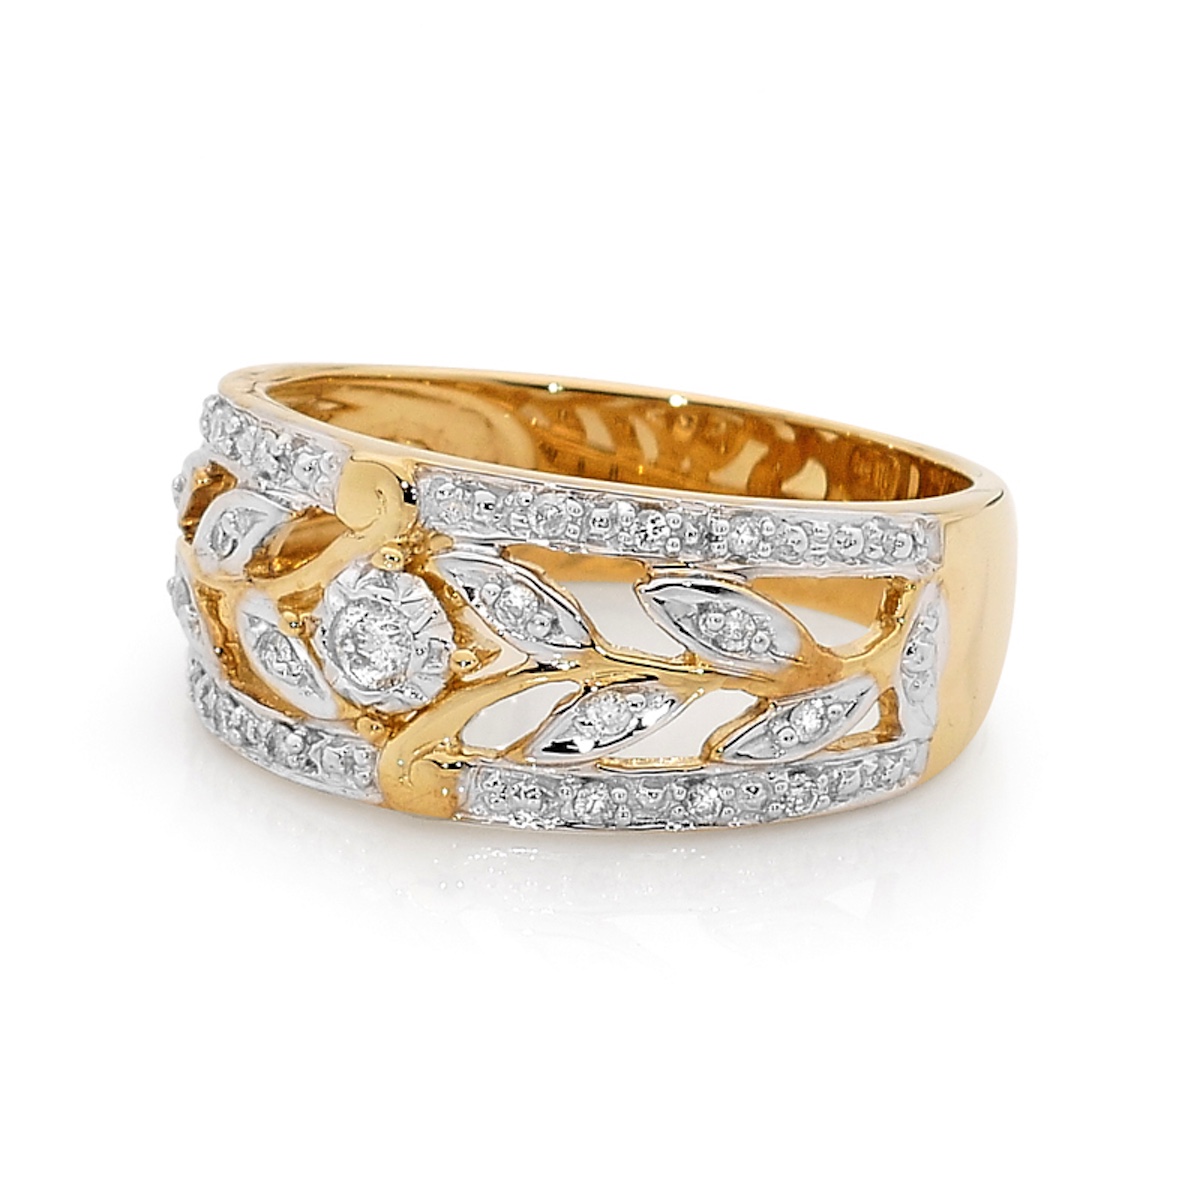 Baroque style Diamond ring